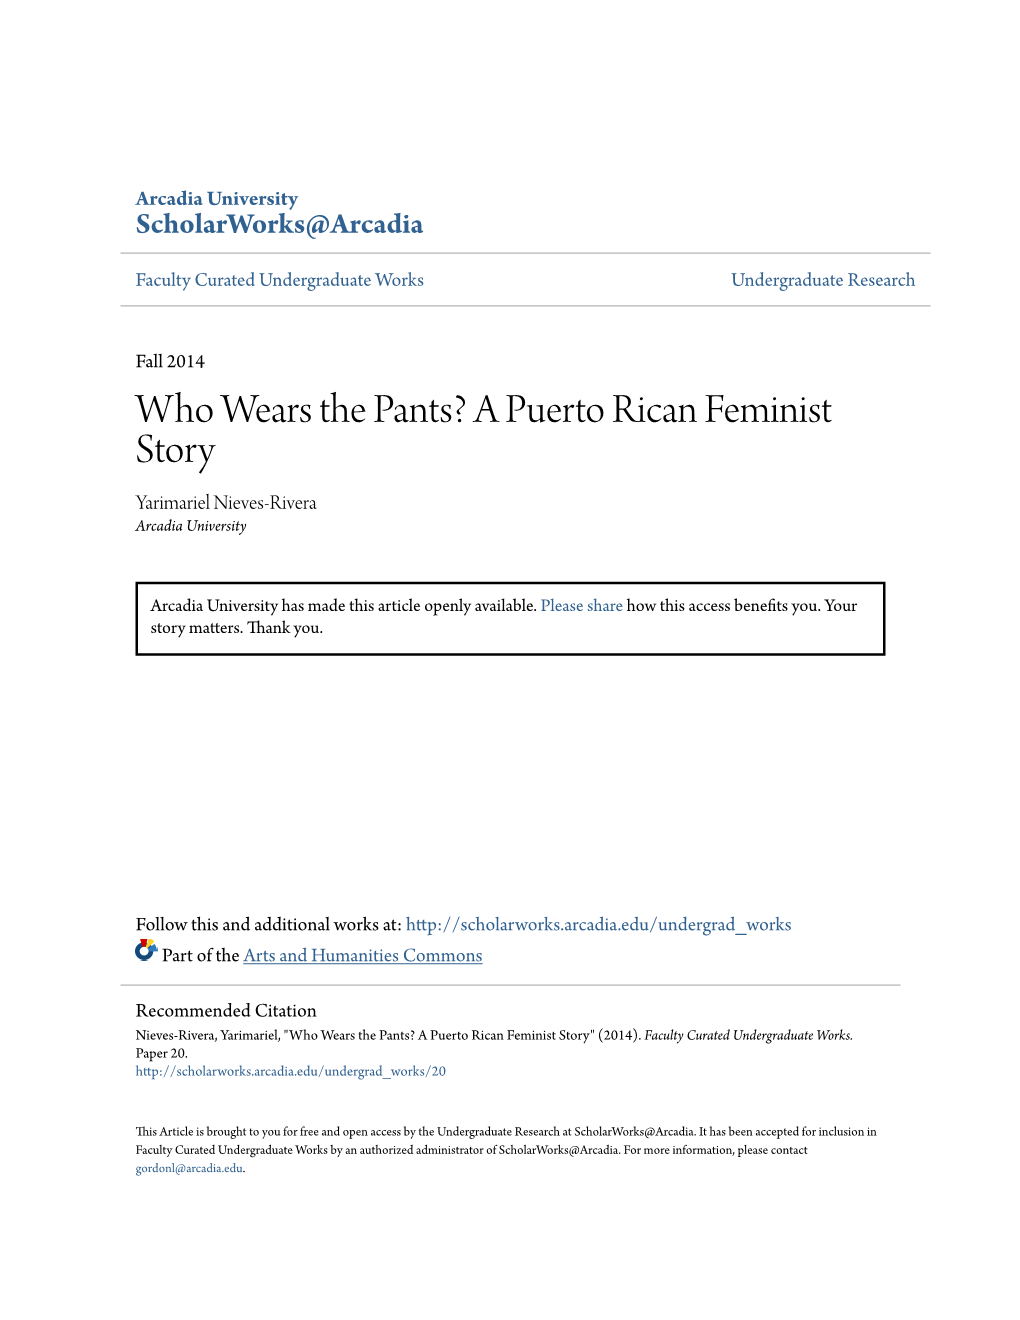 Who Wears the Pants? a Puerto Rican Feminist Story Yarimariel Nieves-Rivera Arcadia University